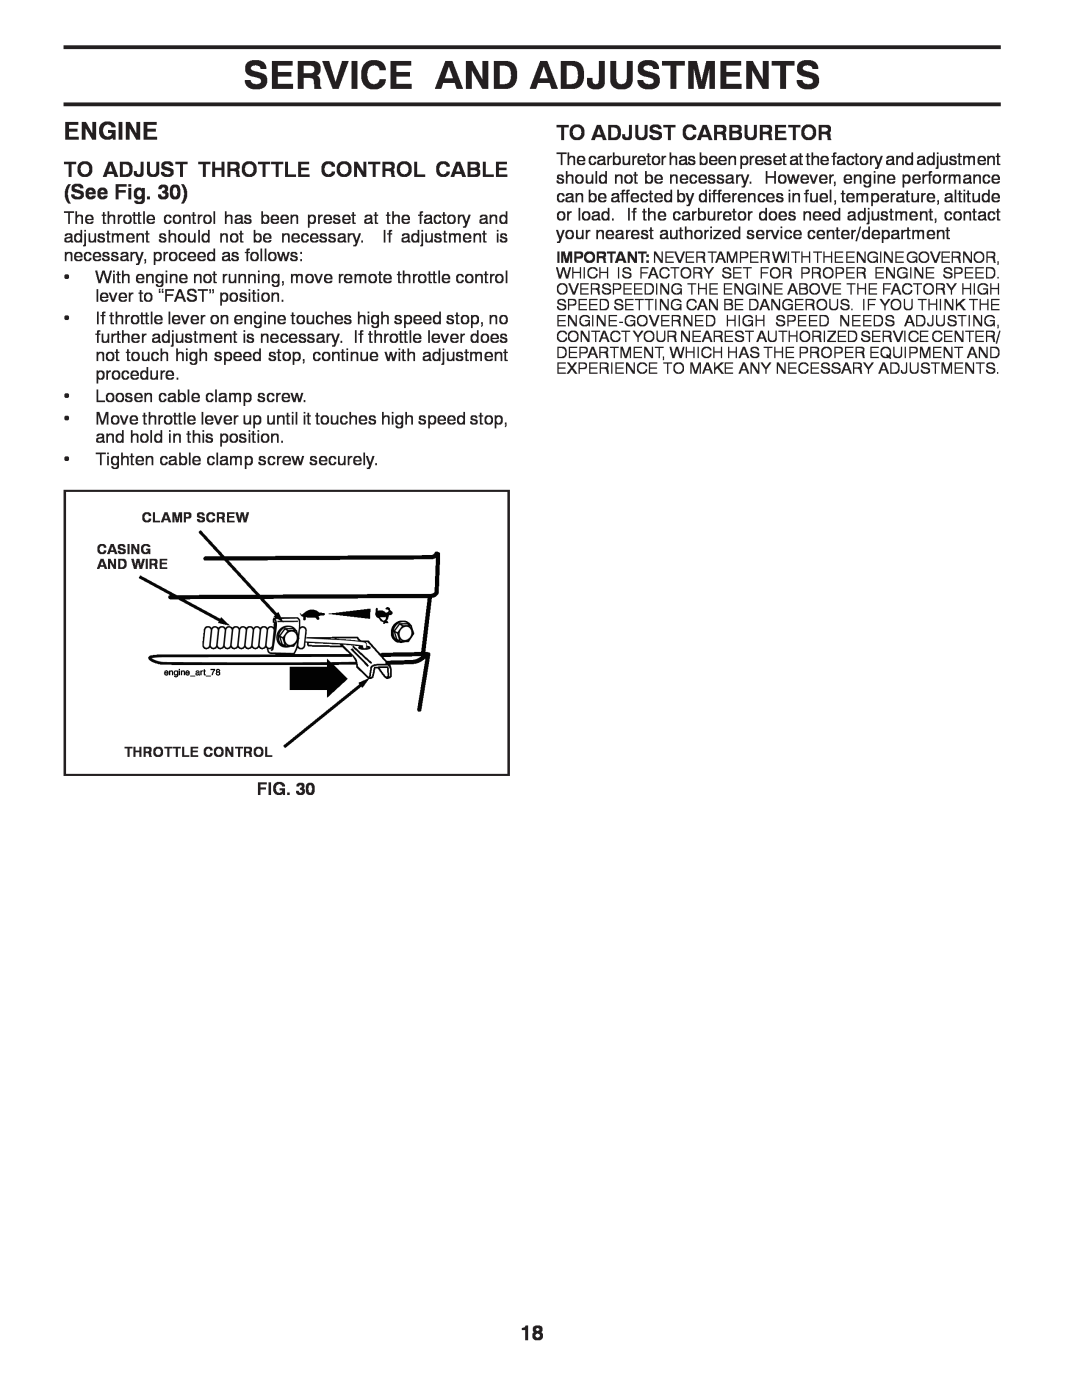 Poulan DRT875 manual TO ADJUST THROTTLE CONTROL CABLE See Fig, To Adjust Carburetor, Service And Adjustments, Engine 